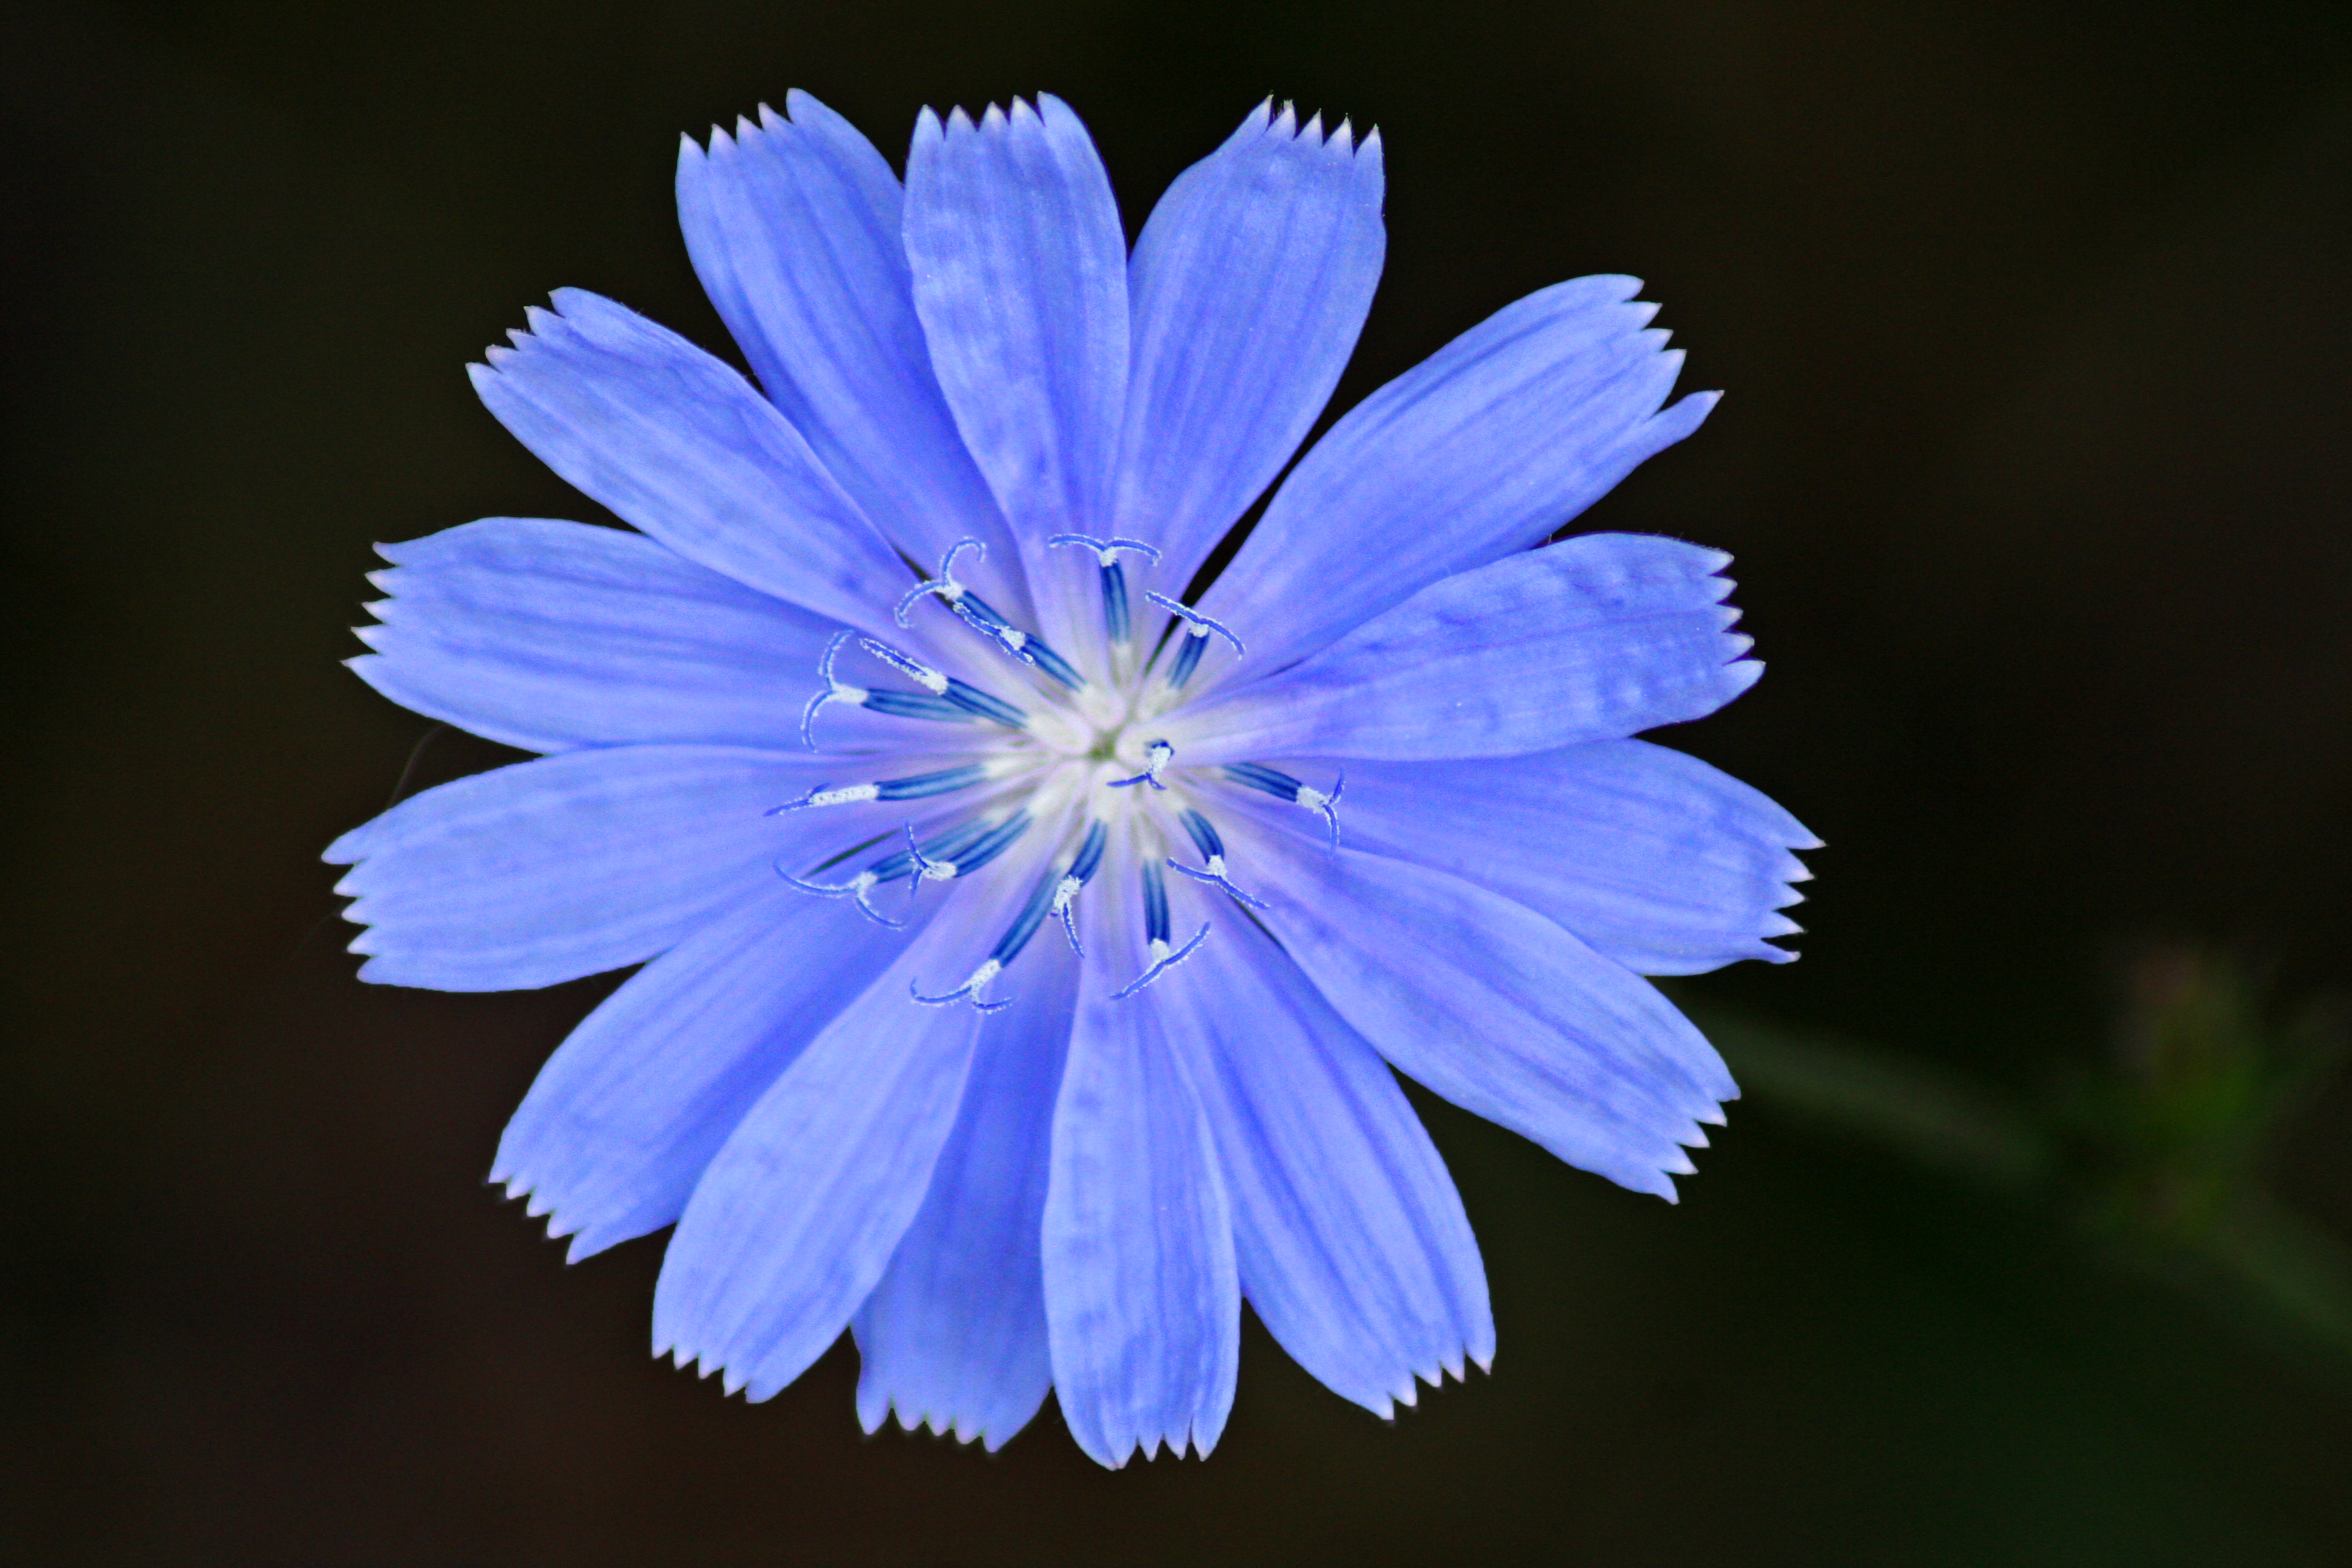 Chicory flower closeup